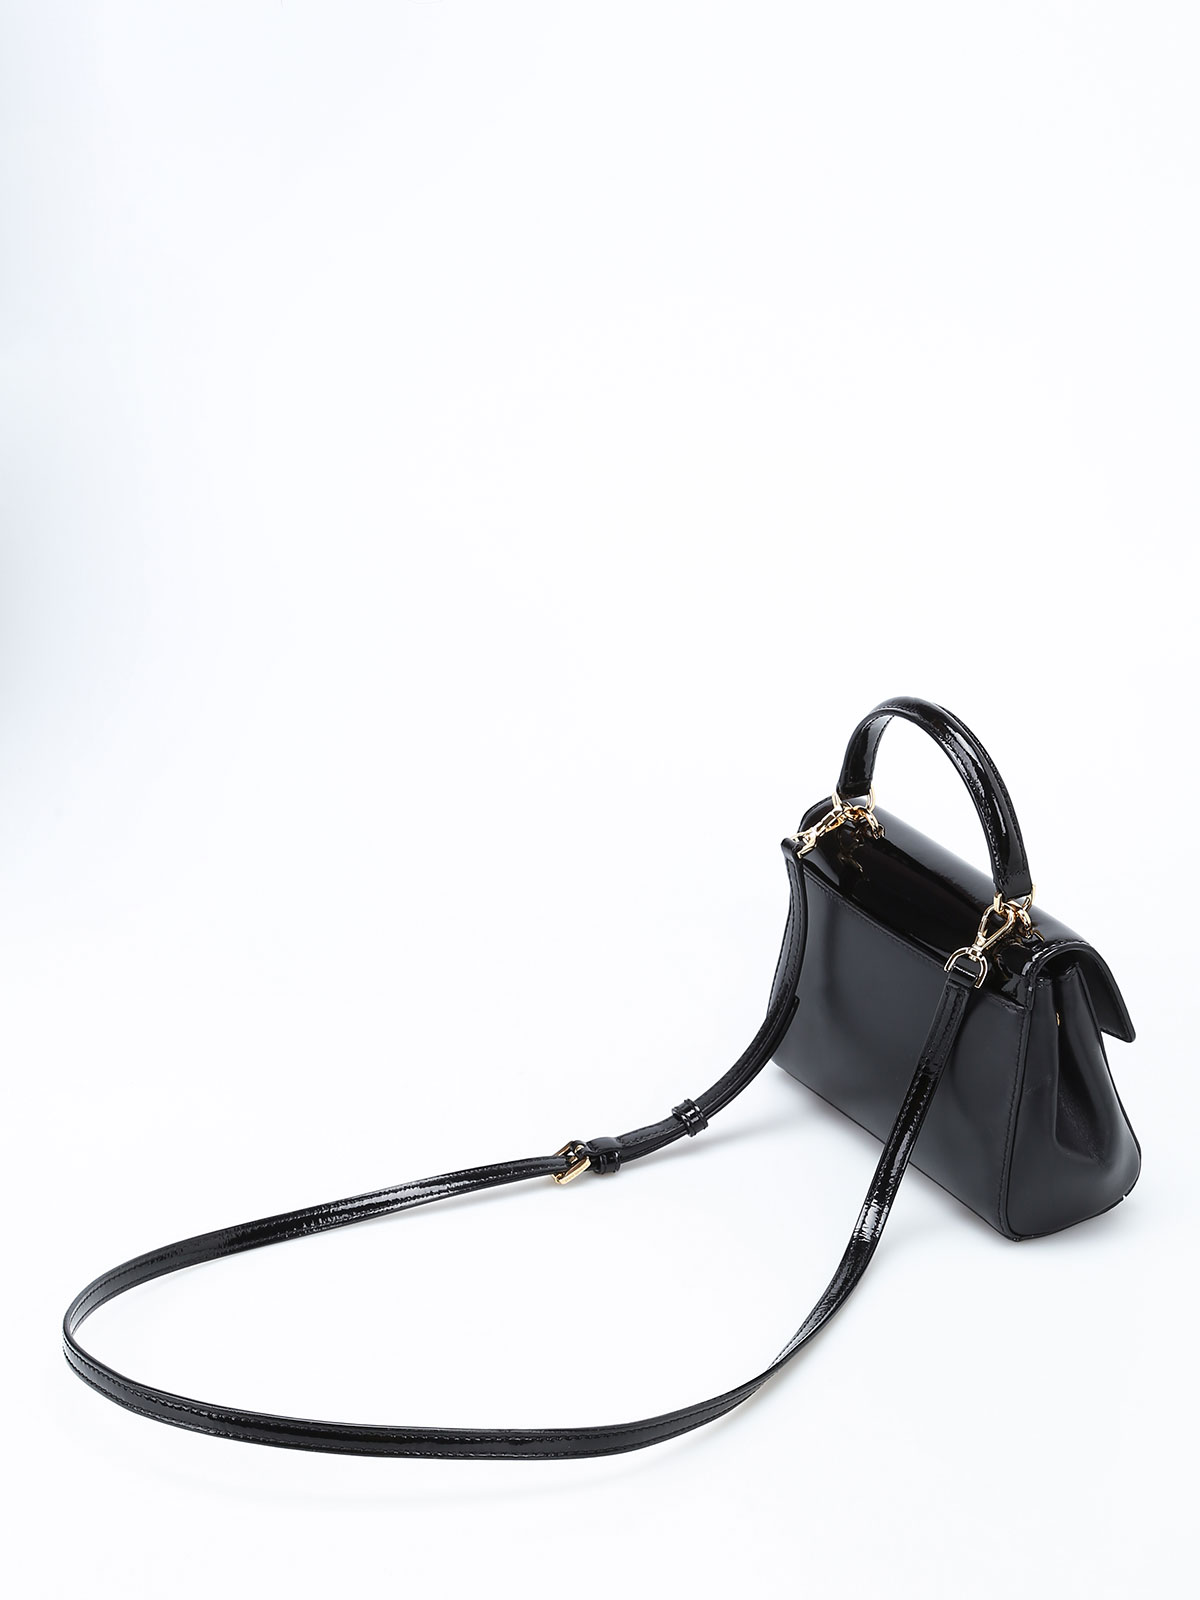 Michael Kors Women's Ava Mini Crossbody Handbag